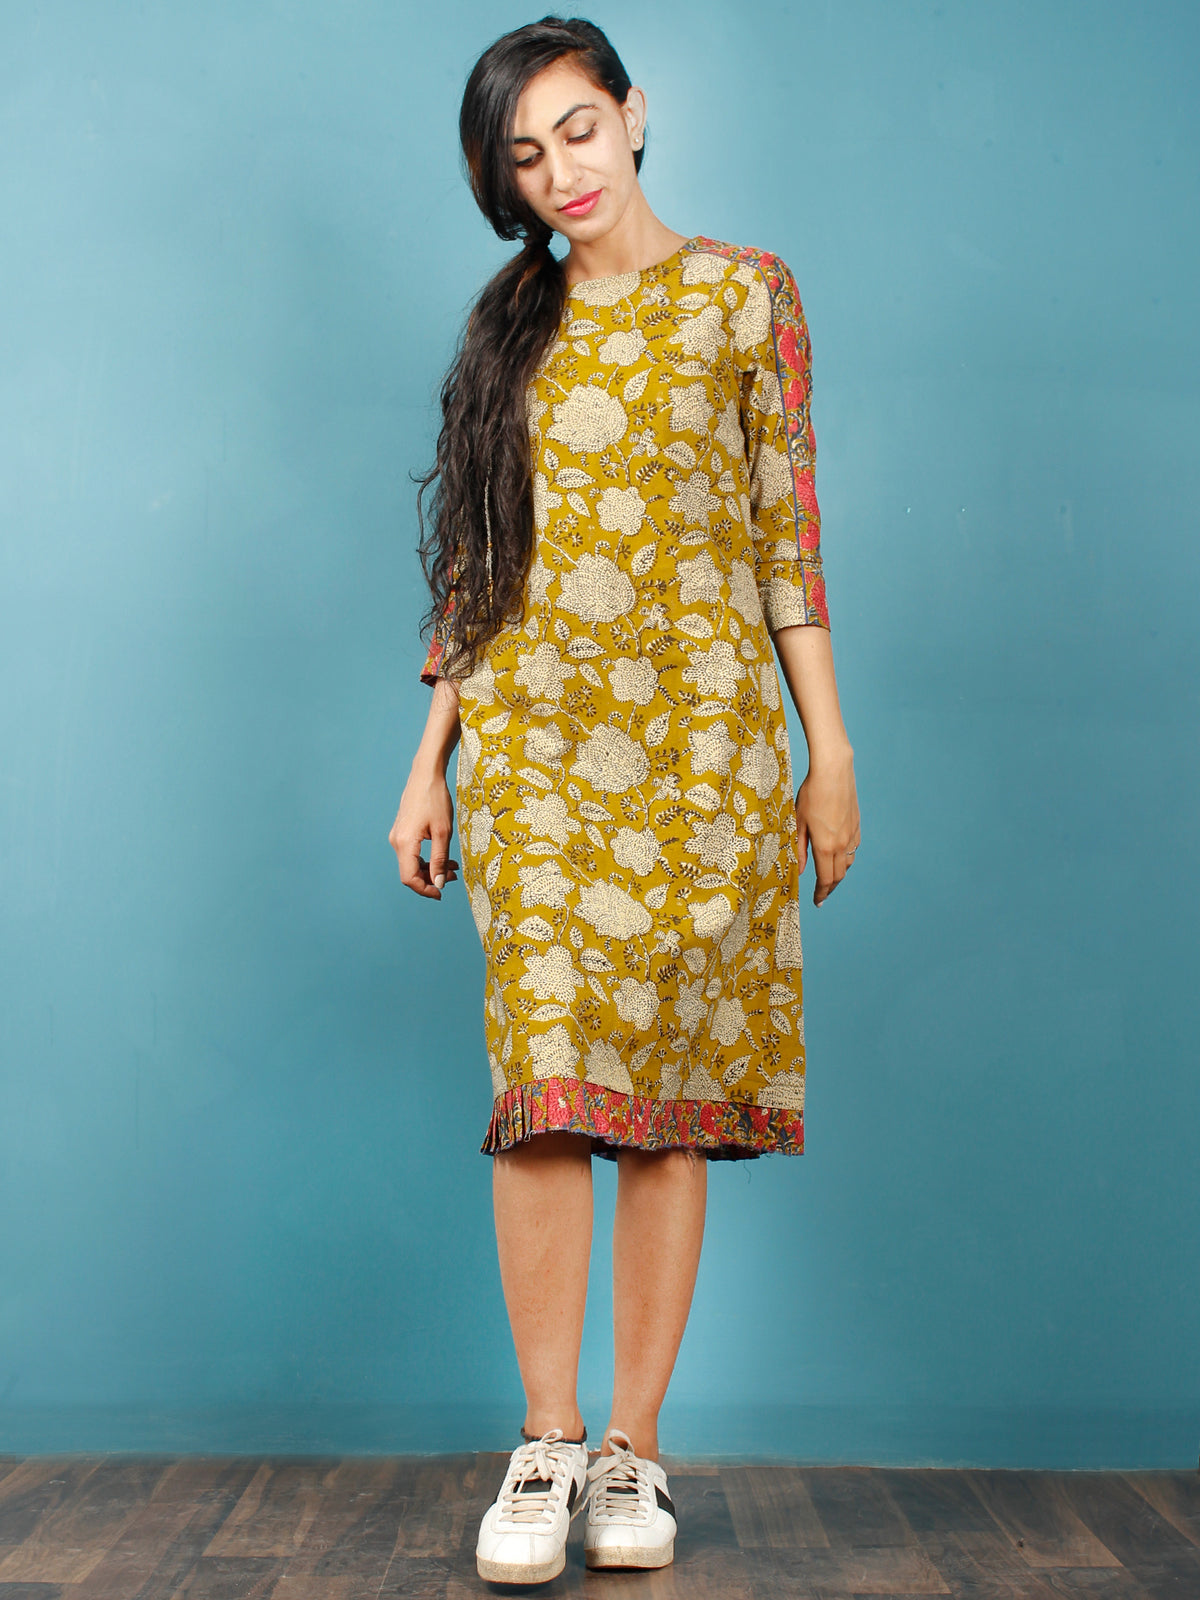 Mustard Black Coral Beige Hand Block Printed Cotton Tunic Dress - D237F1376